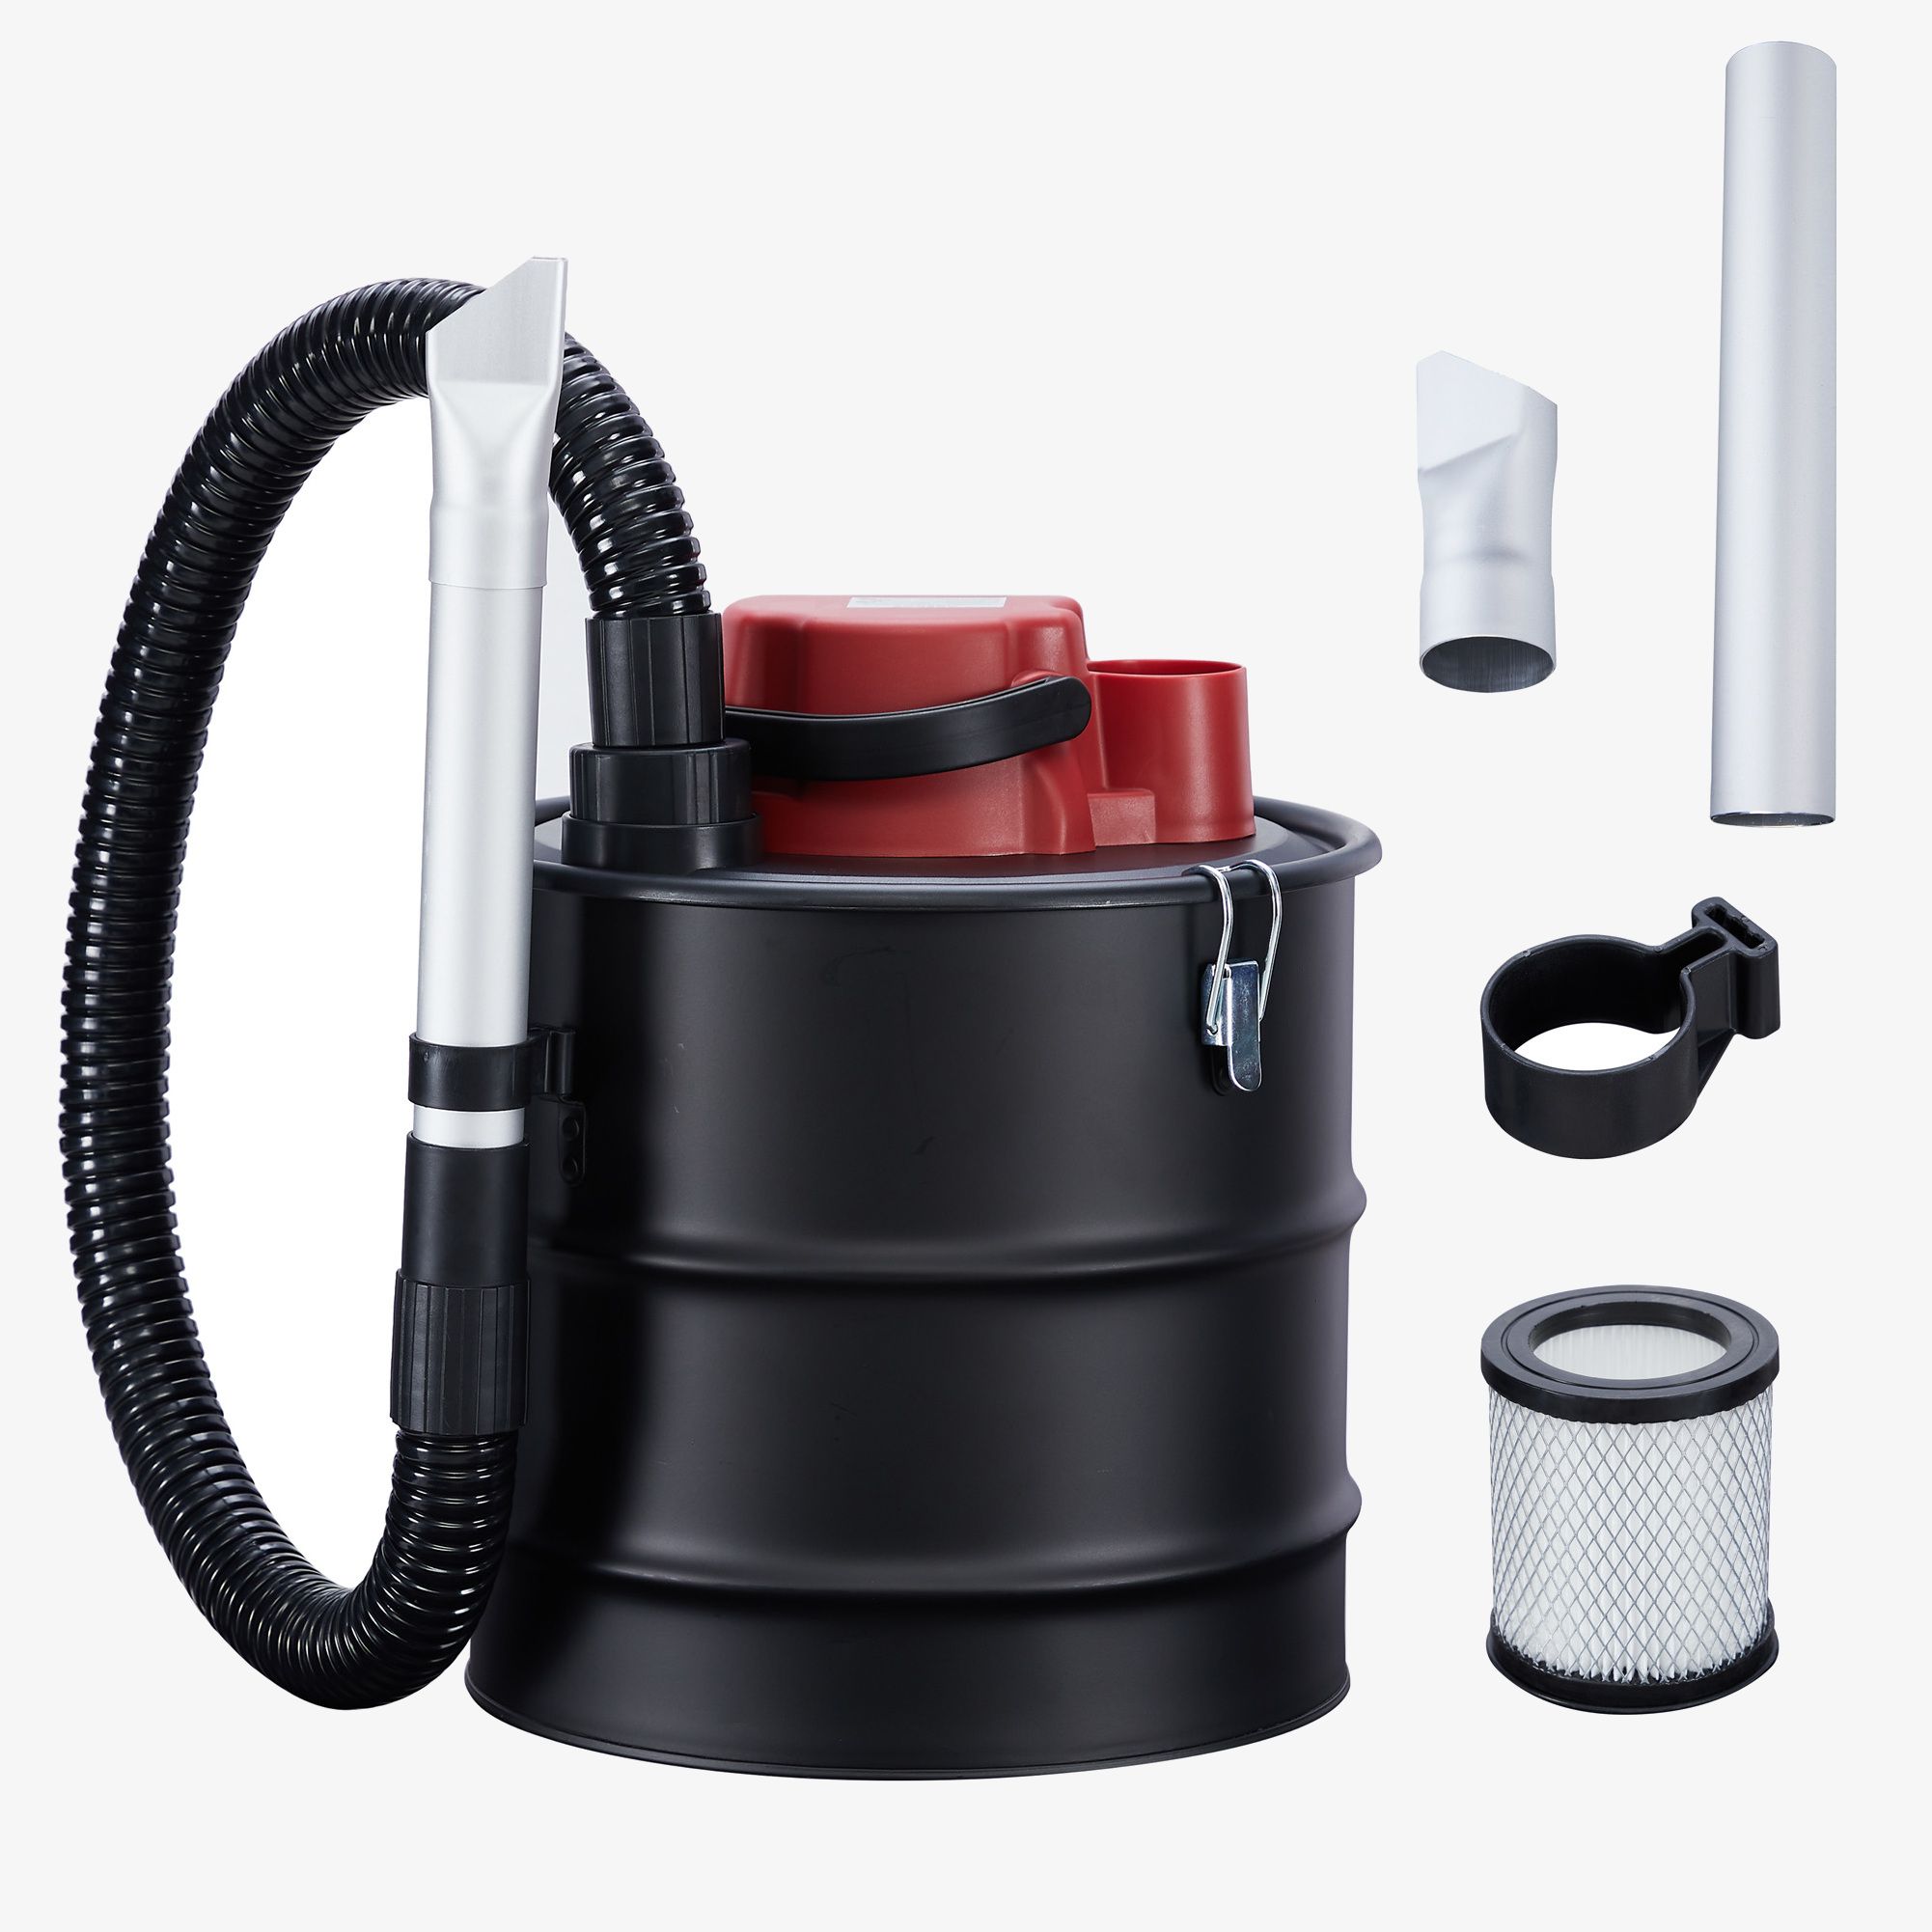 Aspirador de cenizas 15L incl. Filtro HEPA - 4260627424955 - Aspirador y  aspirador de cenizas